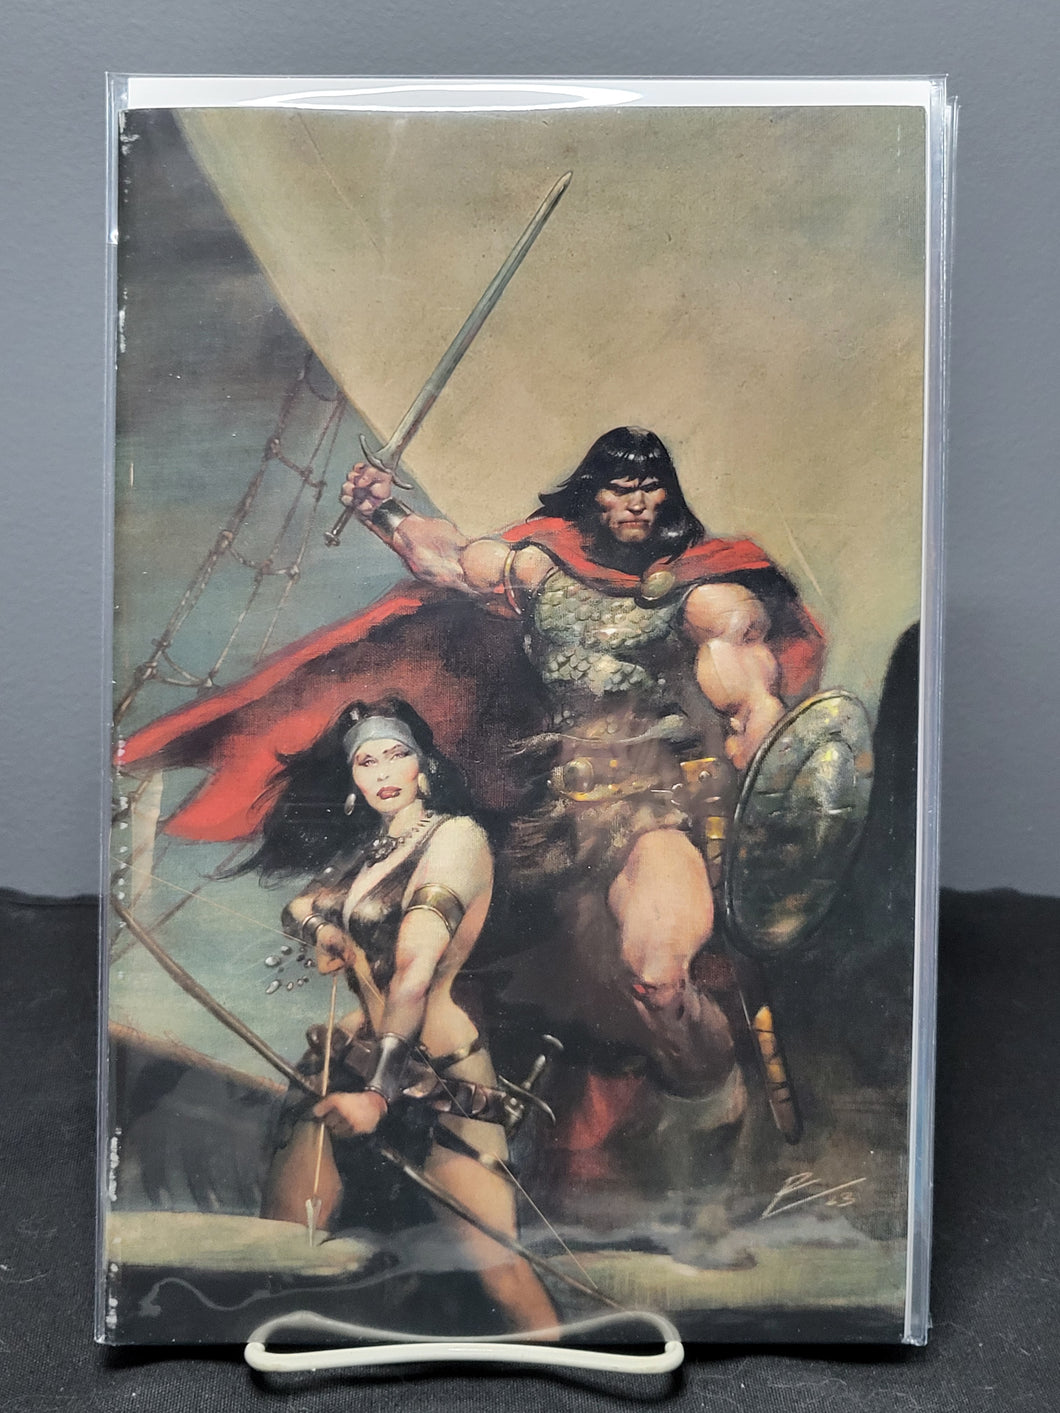 Conan The Barbarian #5 Variant